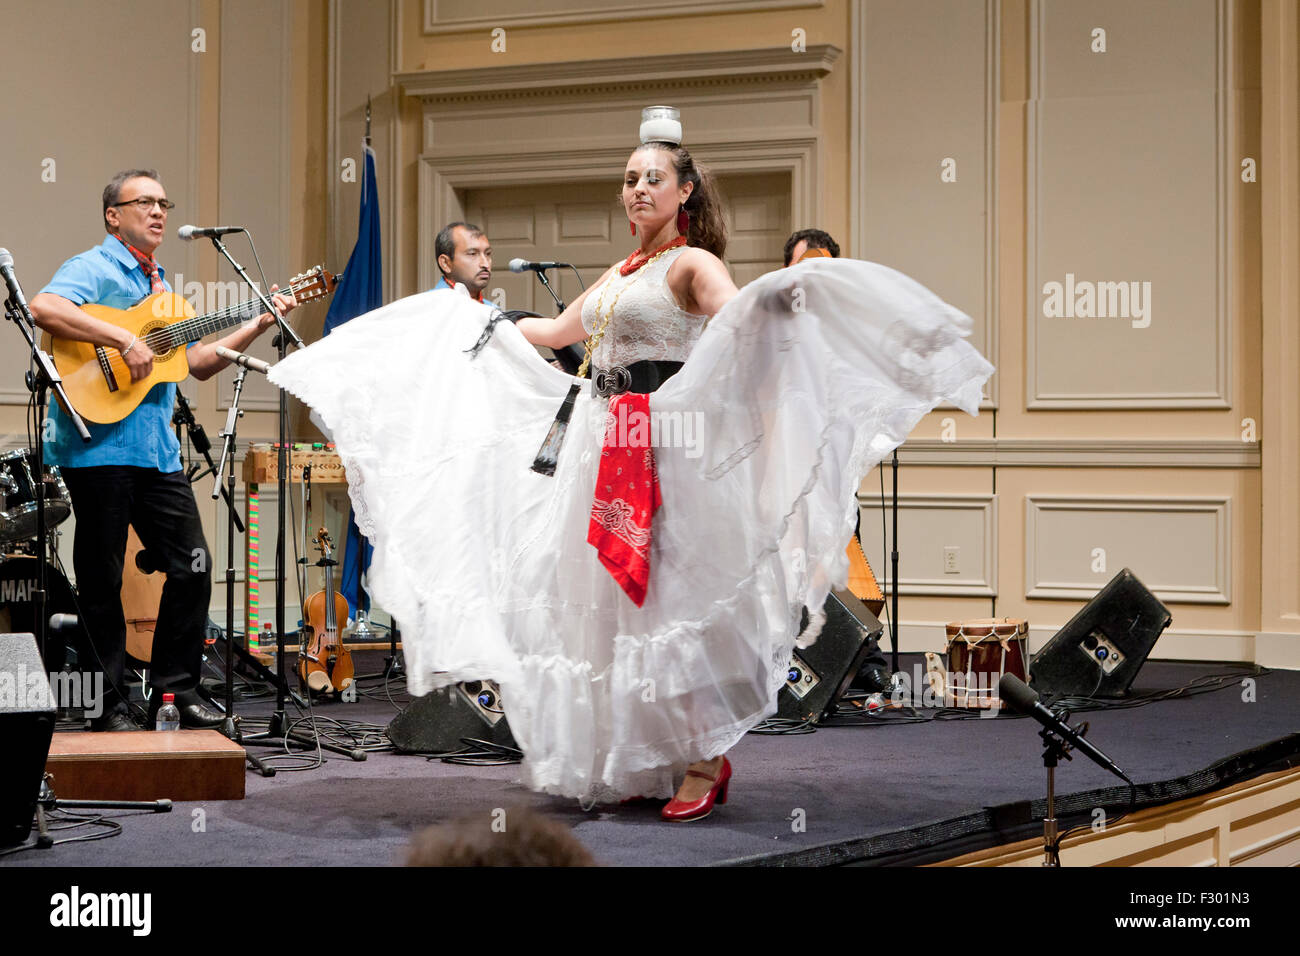 Woman performing La Bruja, Mexican folk dance Stock Photo